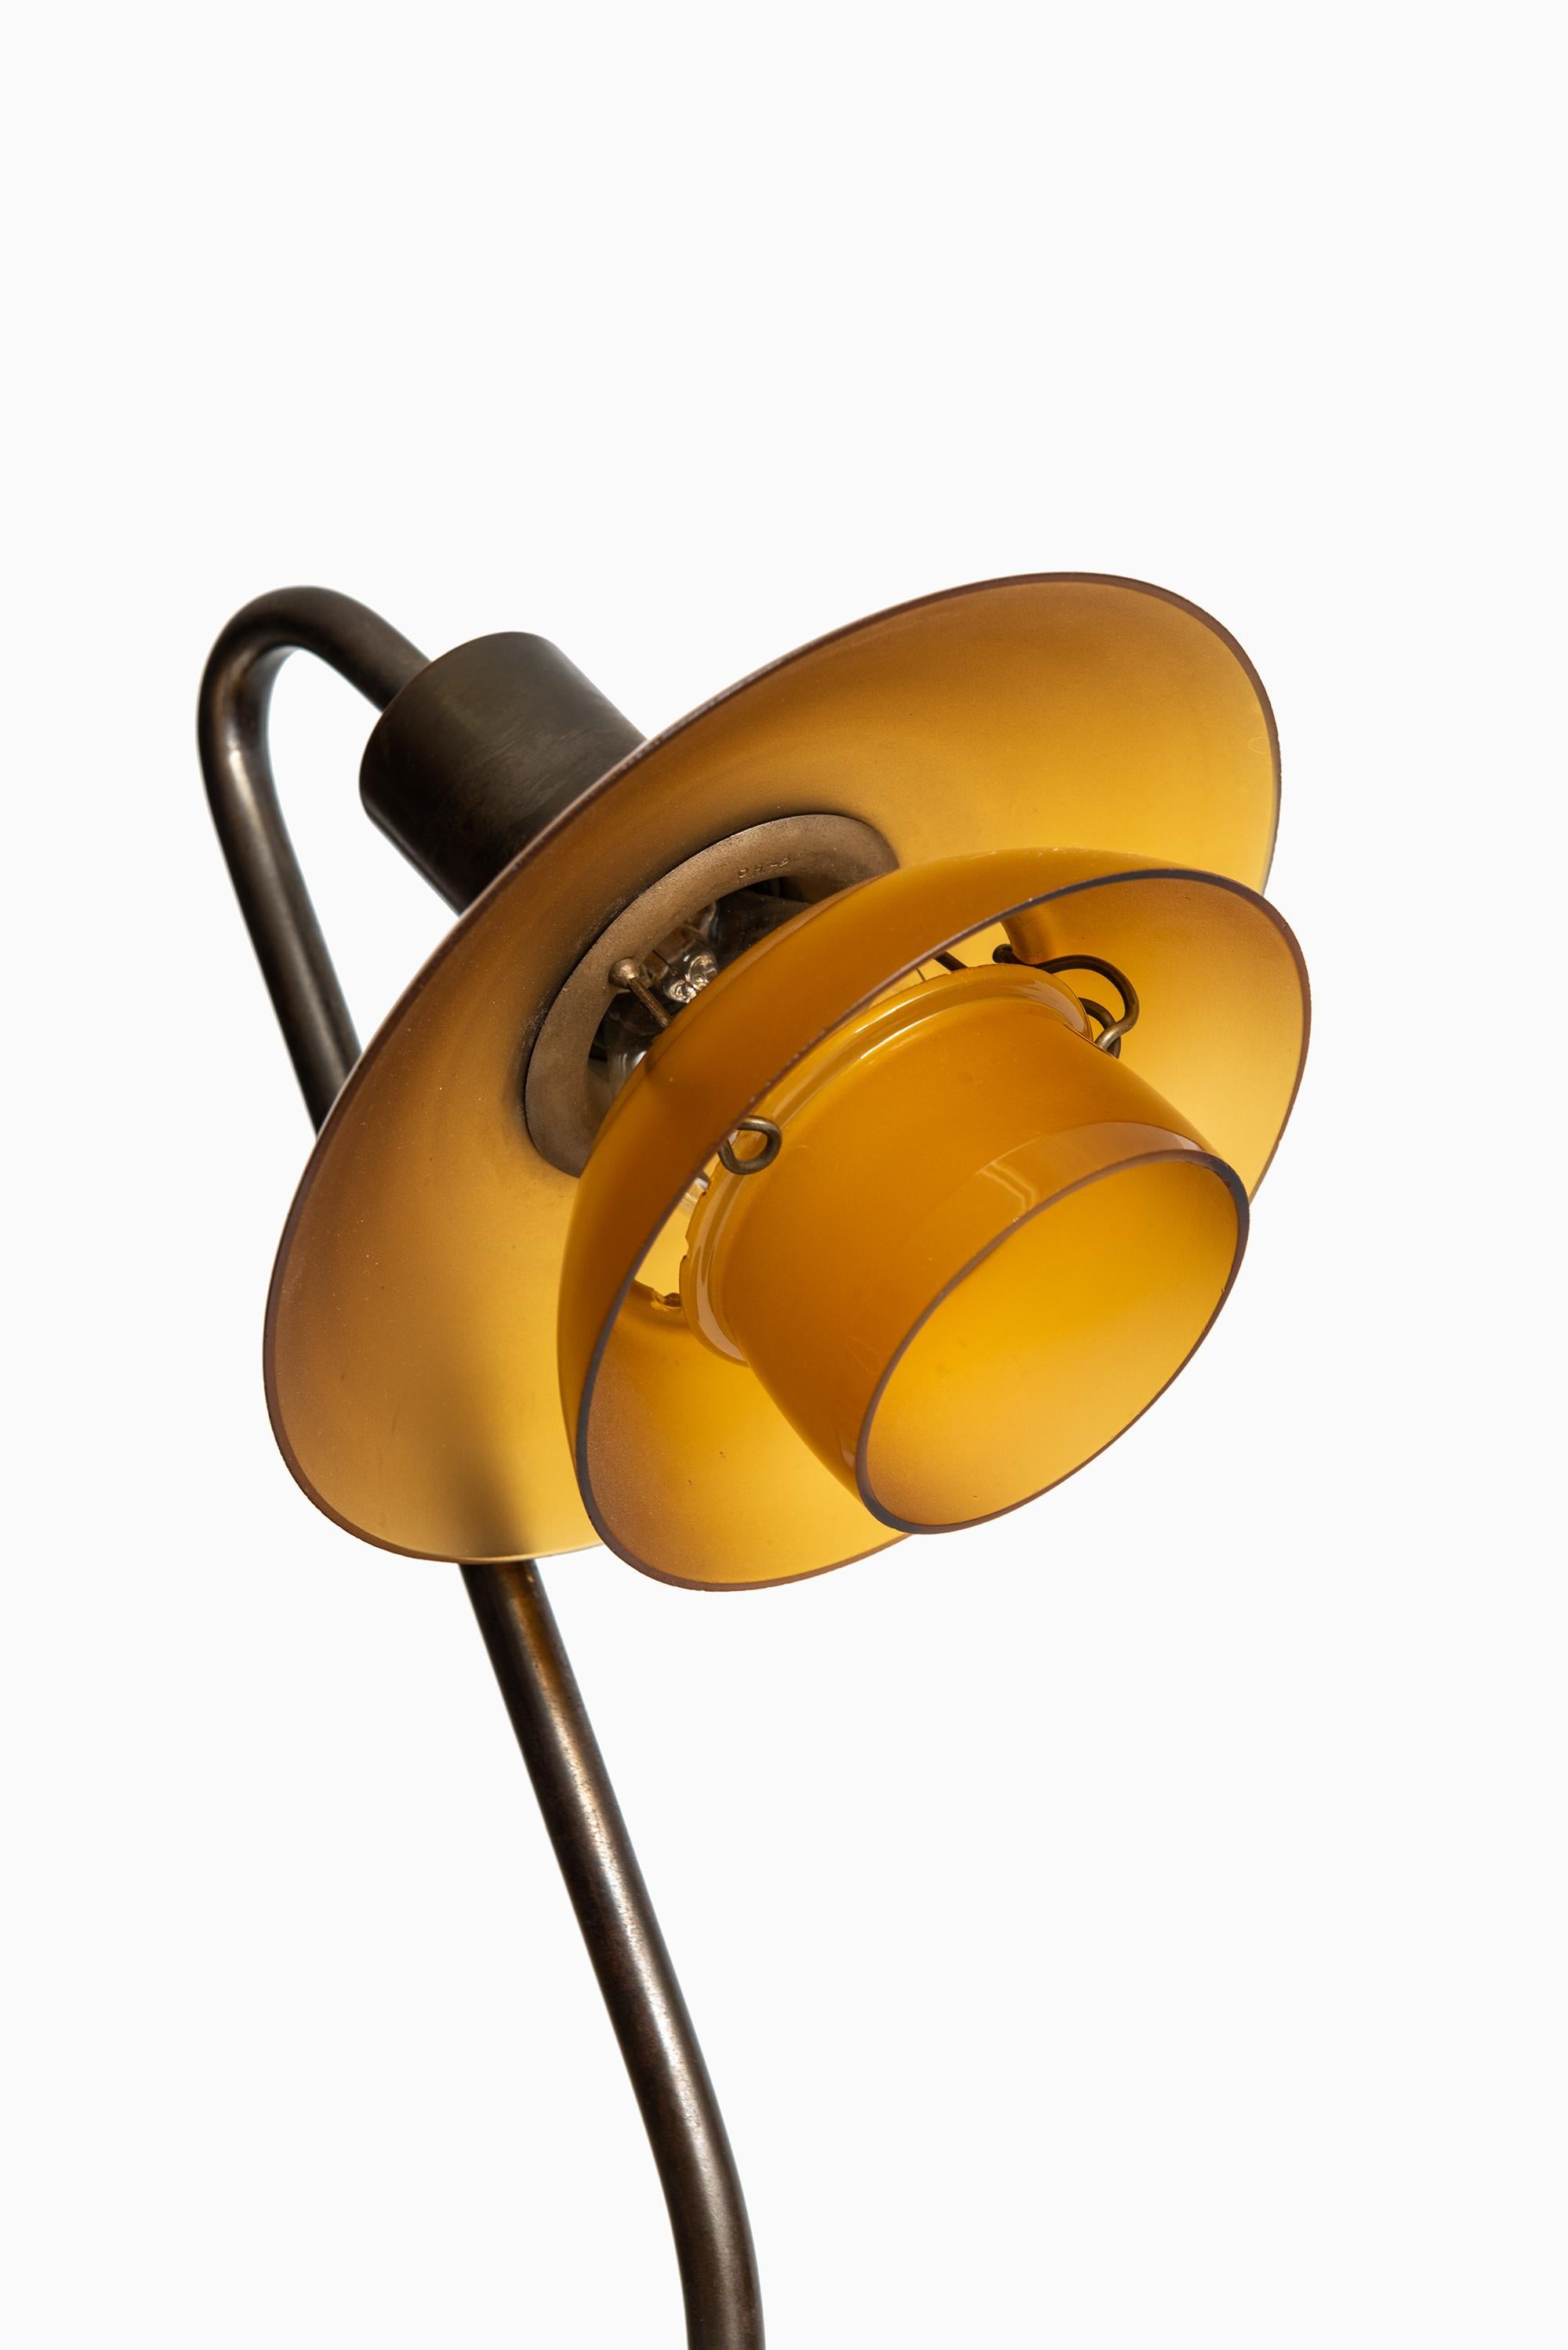 Poul Henningsen Early Table Lamp Model PH-2/2 'Vintergækken' by Louis Poulsen For Sale 1